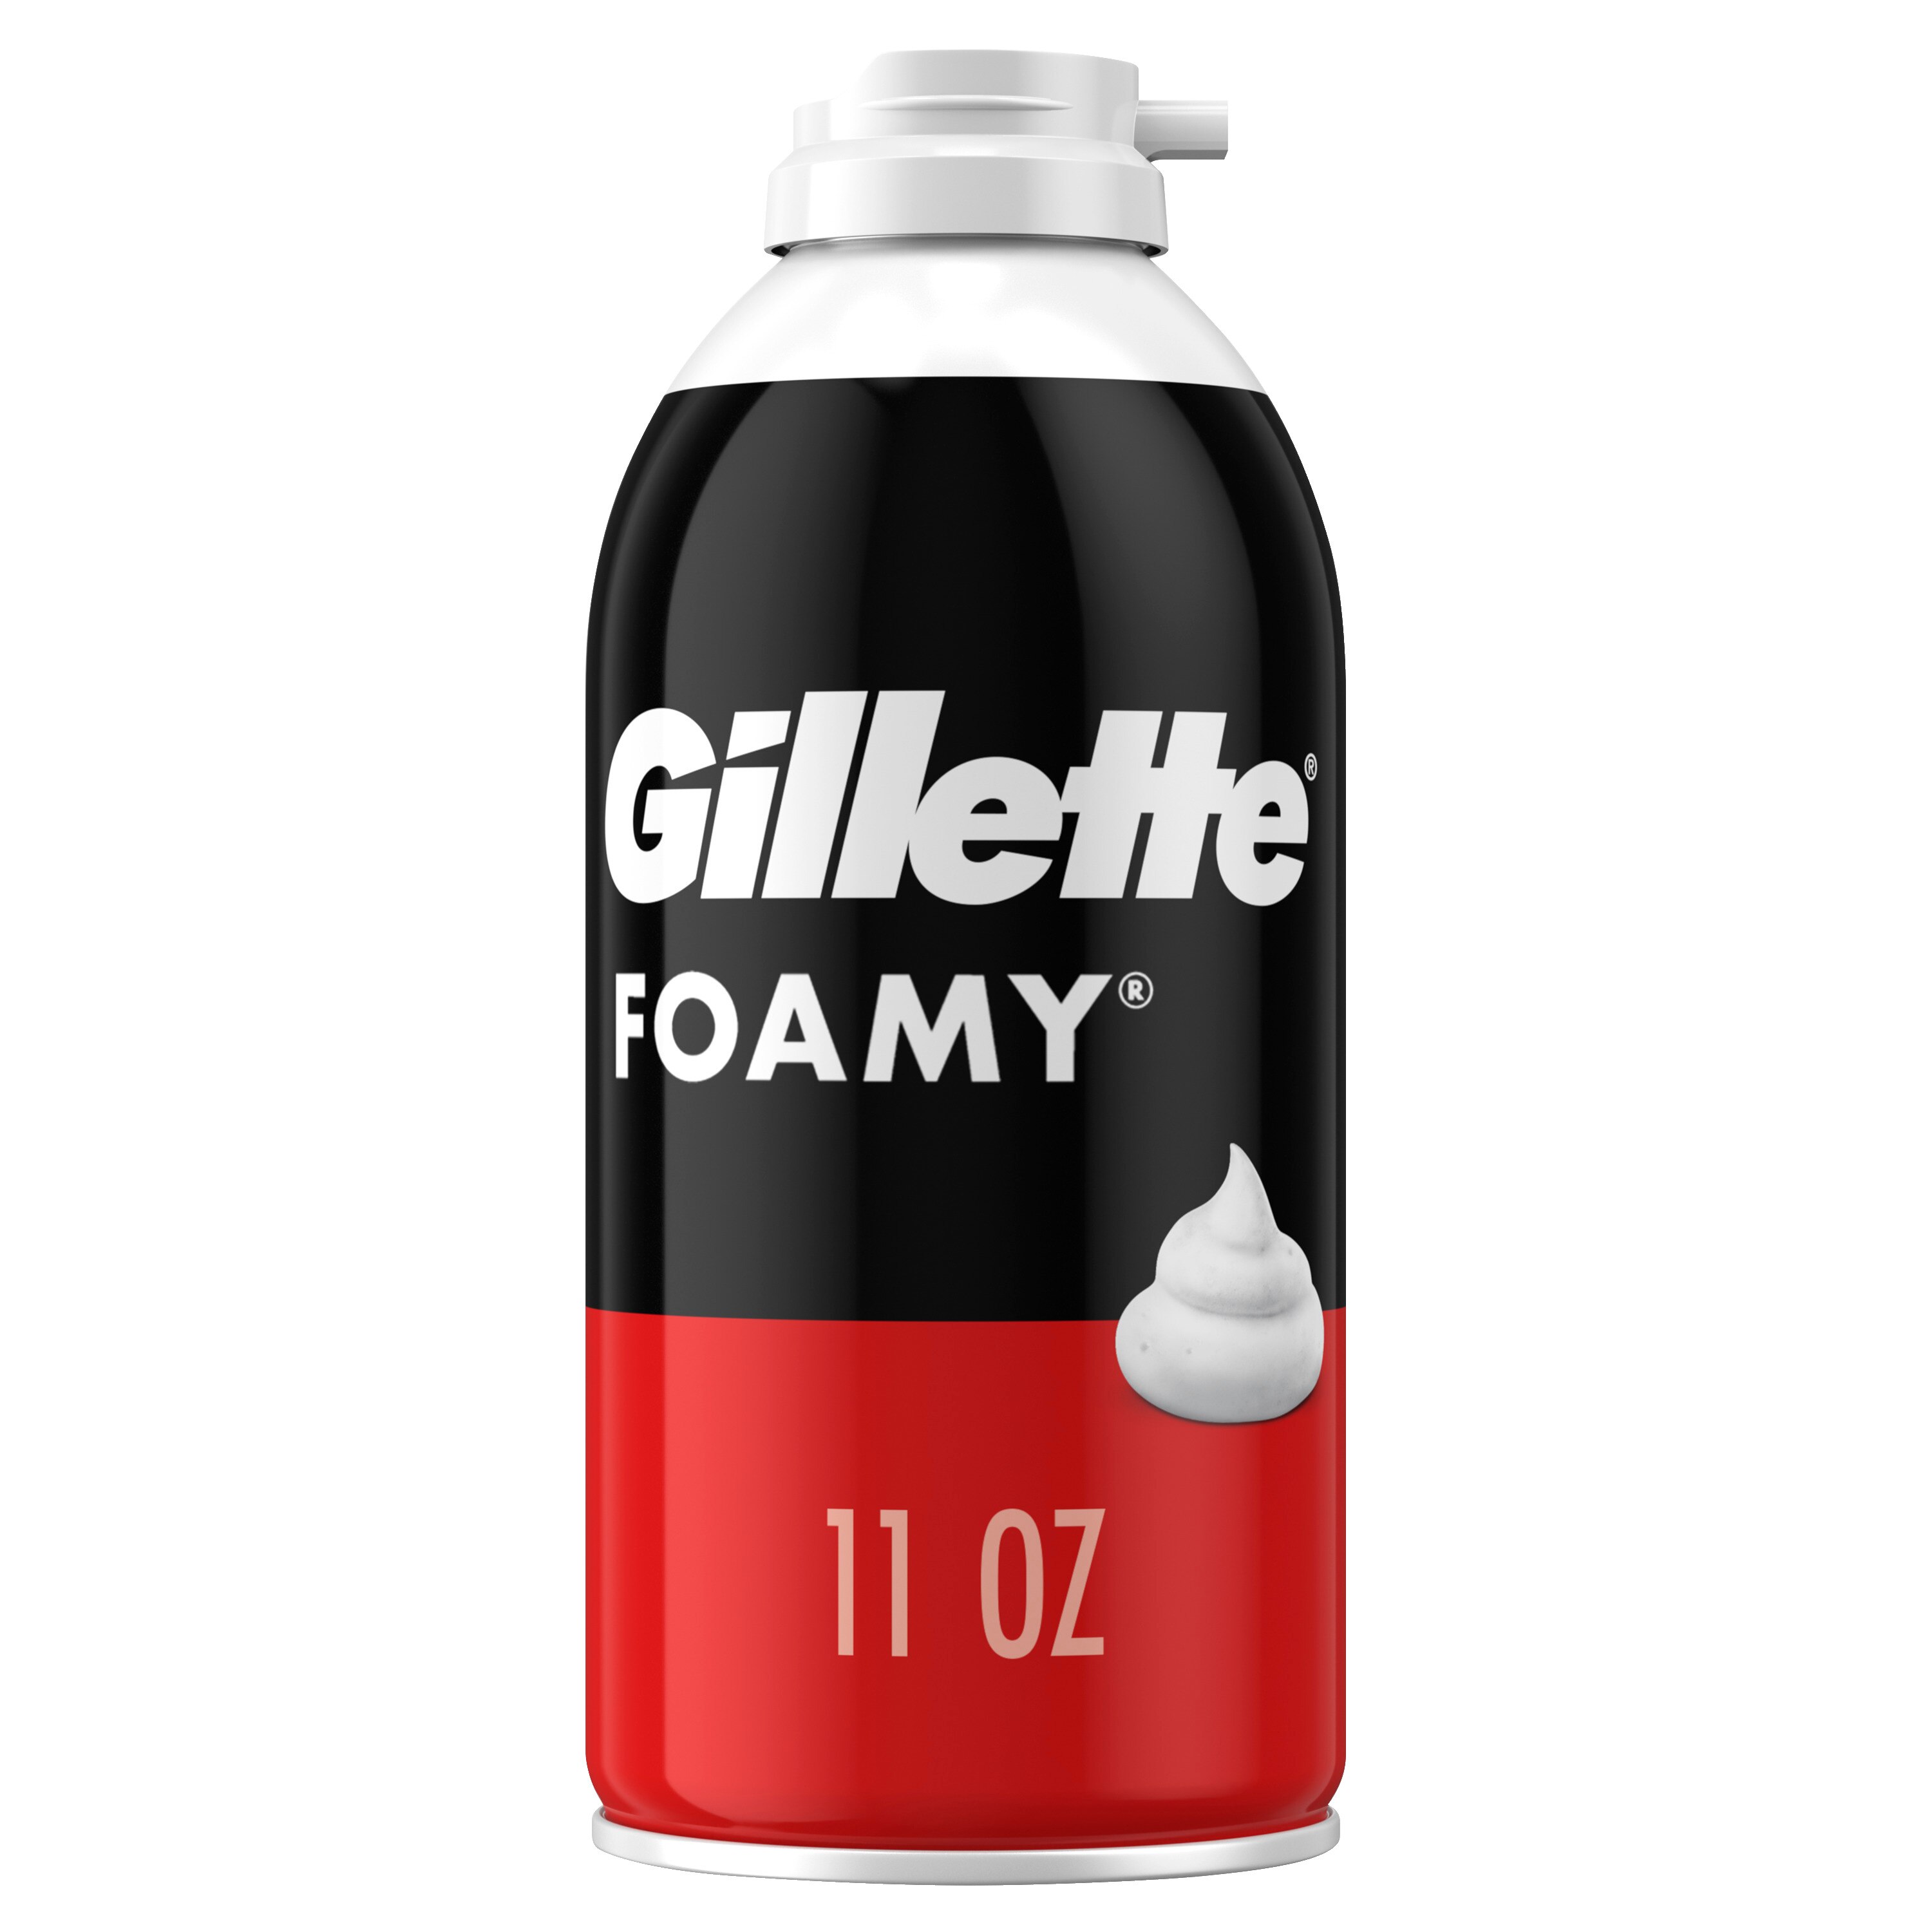  Gillette Foamy Regular Shave Cream, 11 OZ 